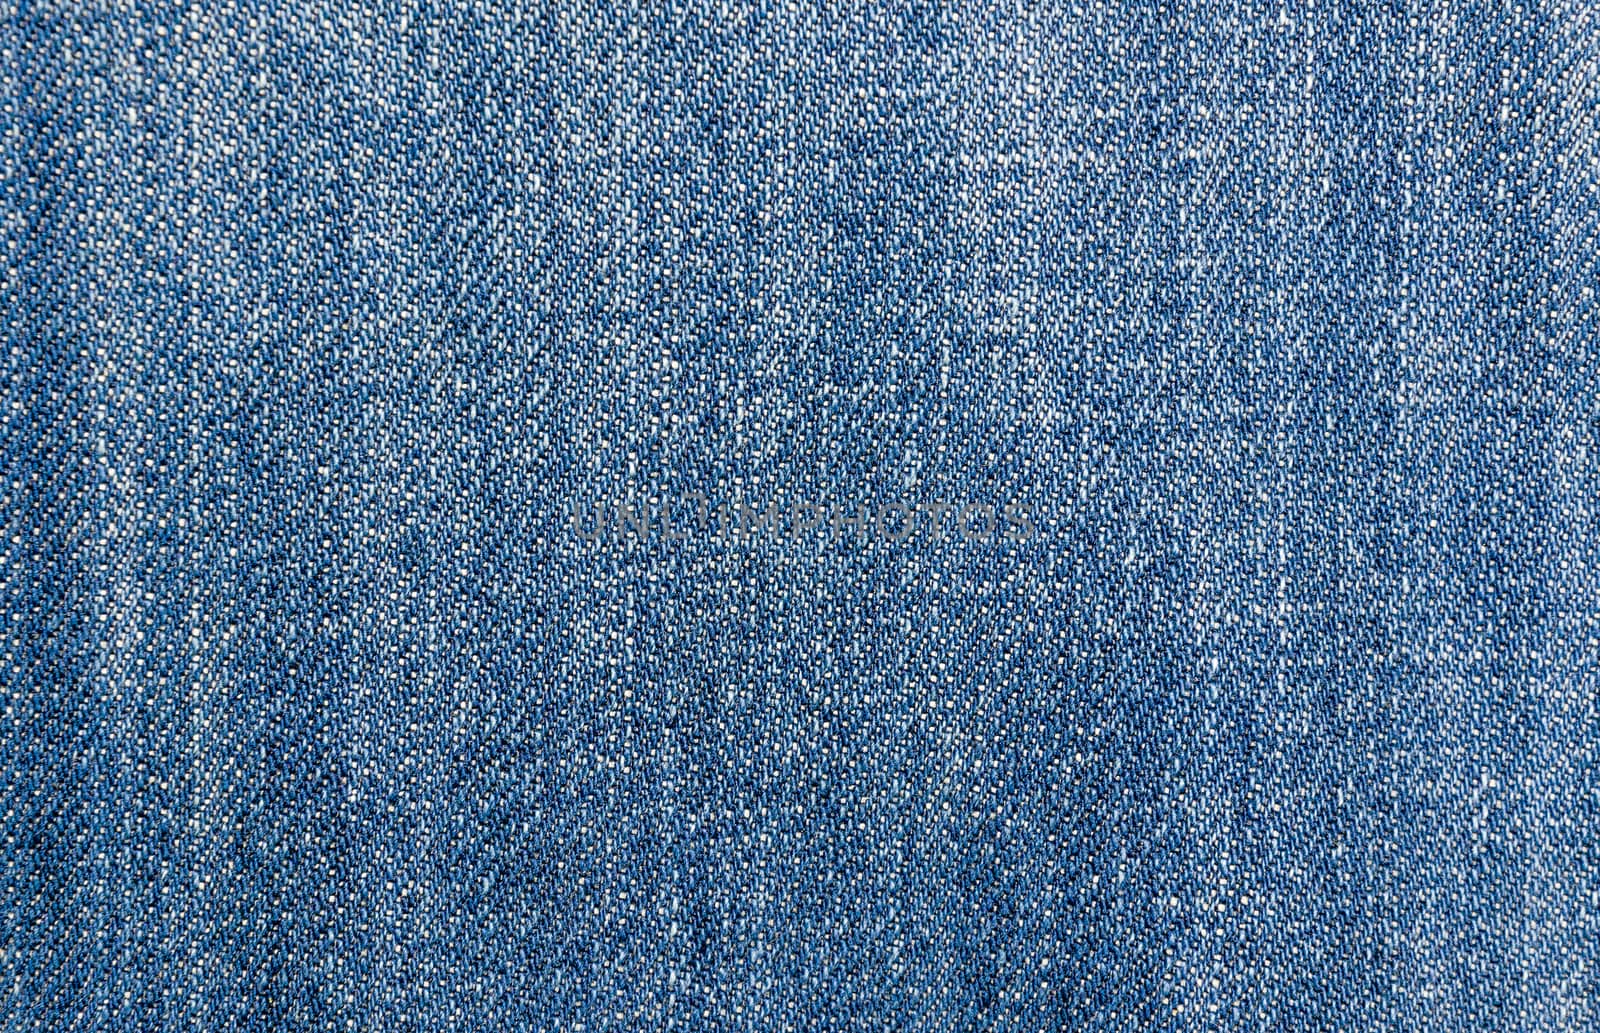 a blue jean texture